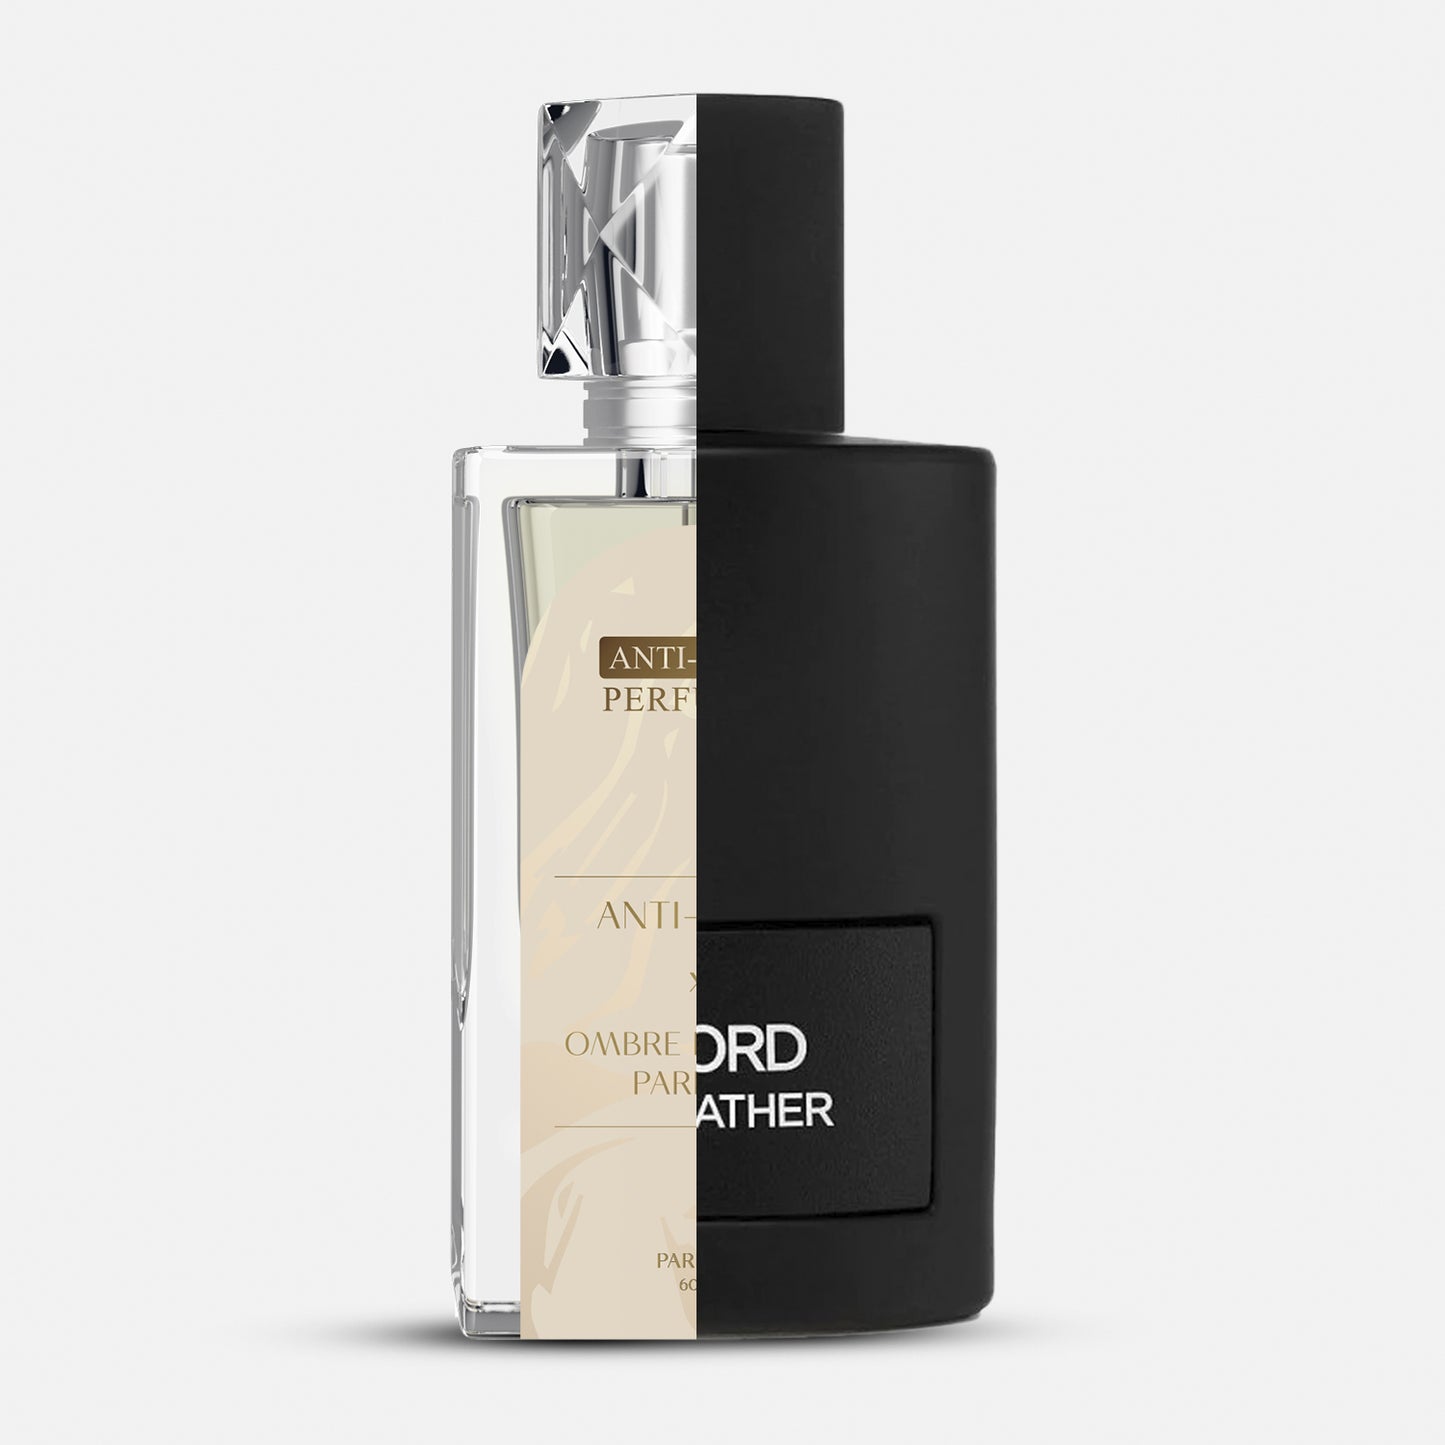 ANTI-BRND X Ombre Leather Parfum